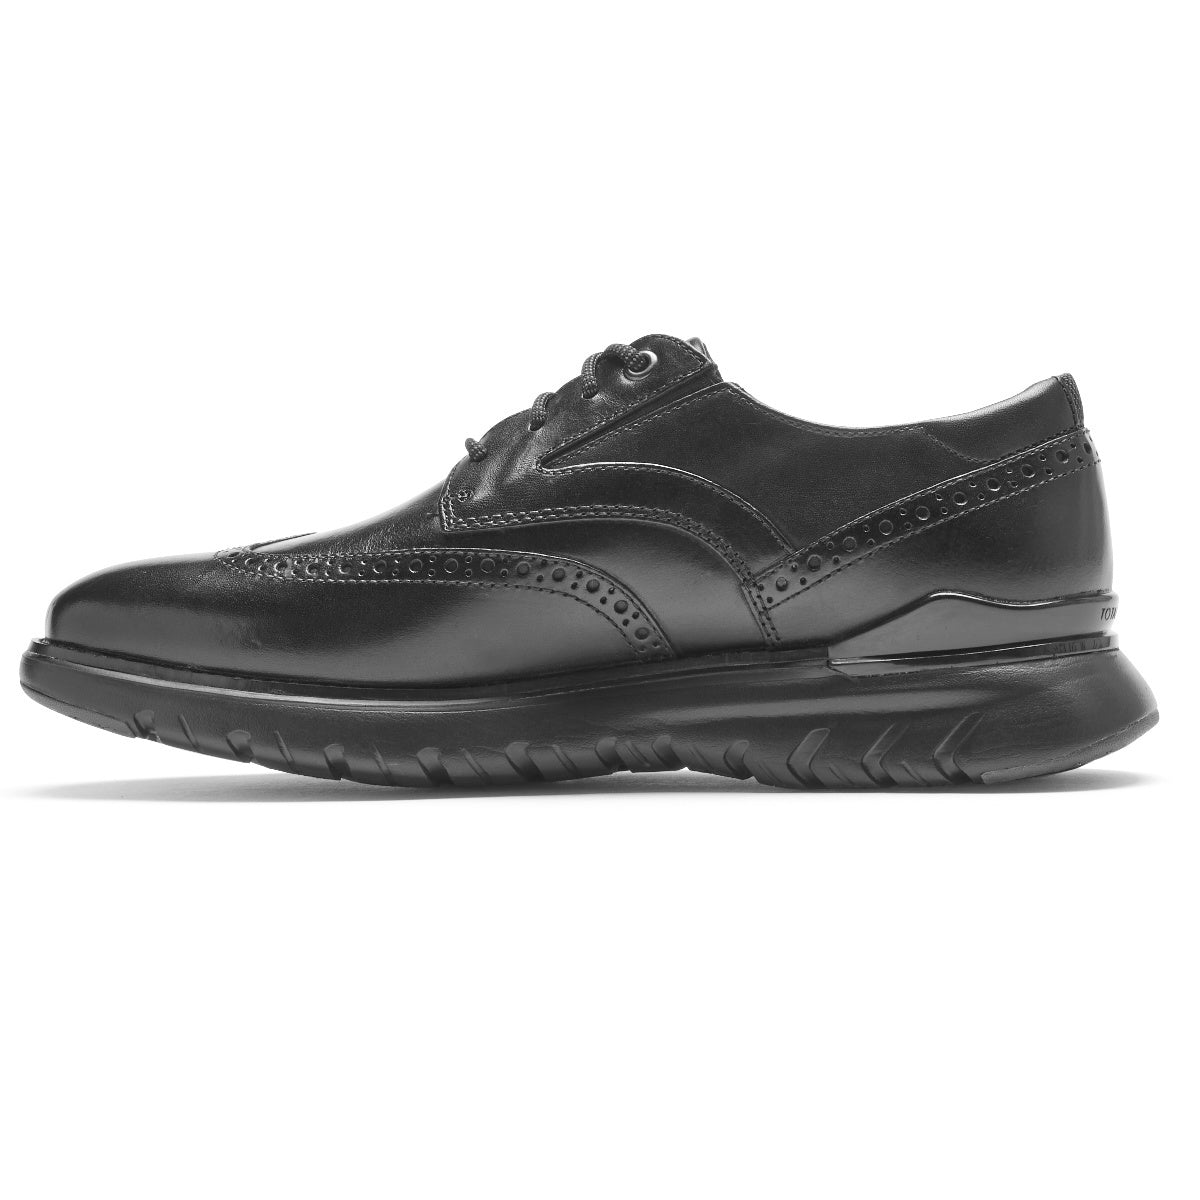 Rockport Men's TM Lite Lace Up Leather Flexible Cushioned Sneaker Shoe